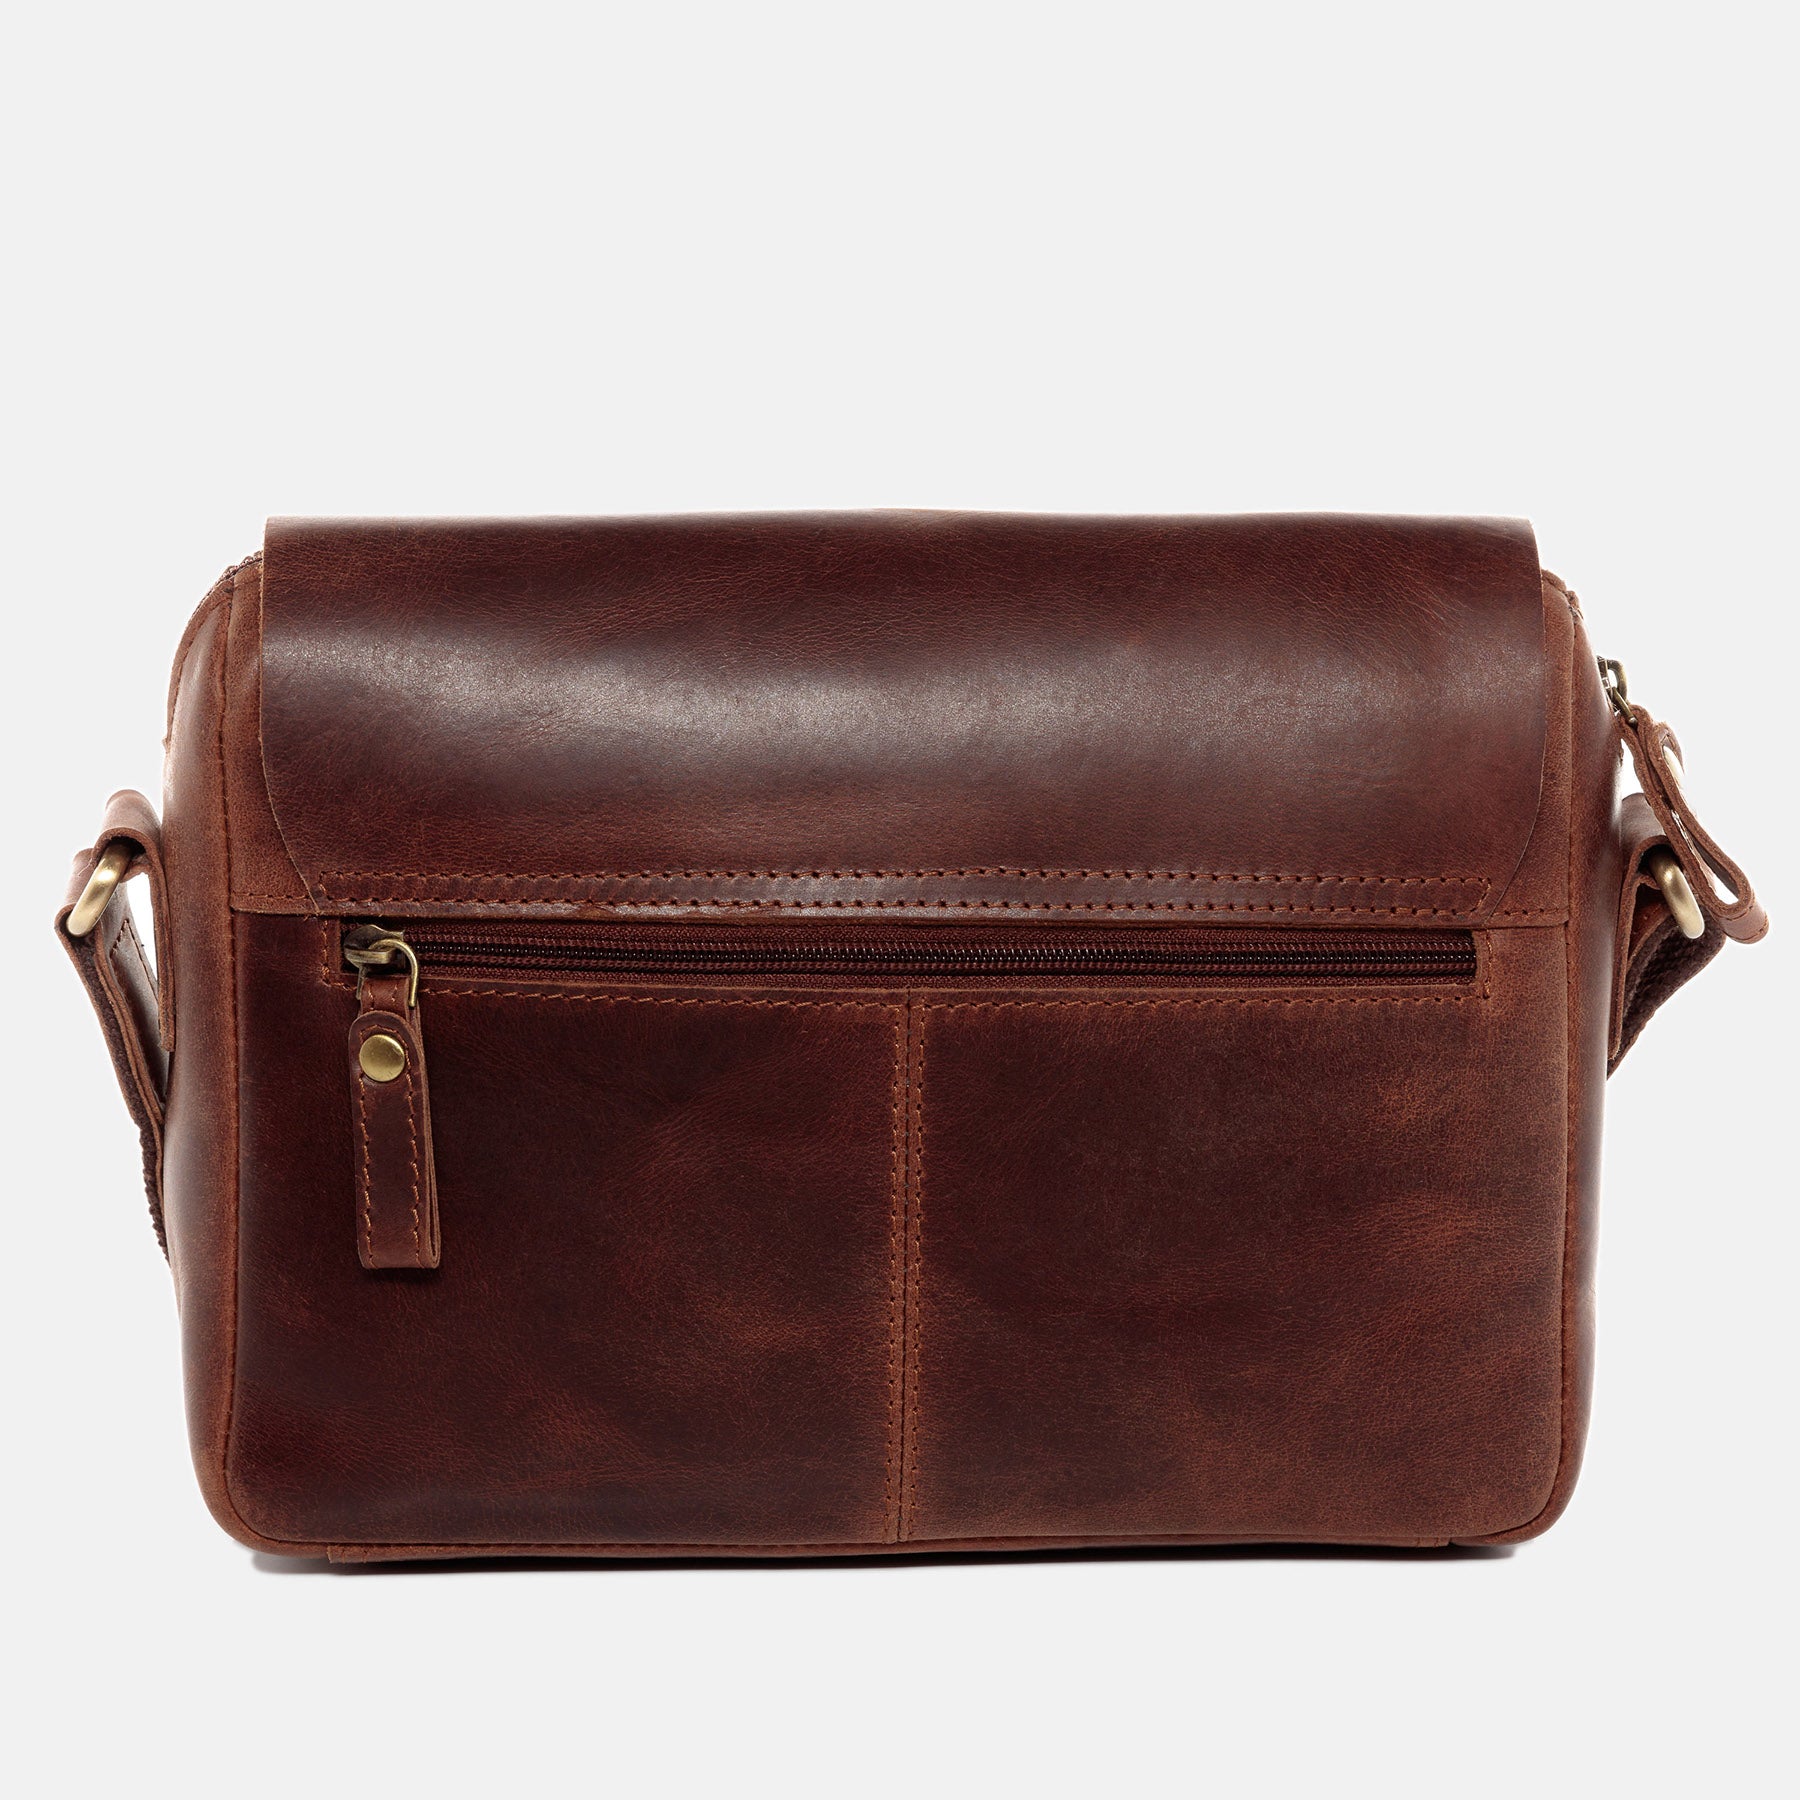 Messenger bag YALE natural leather brown-cognac